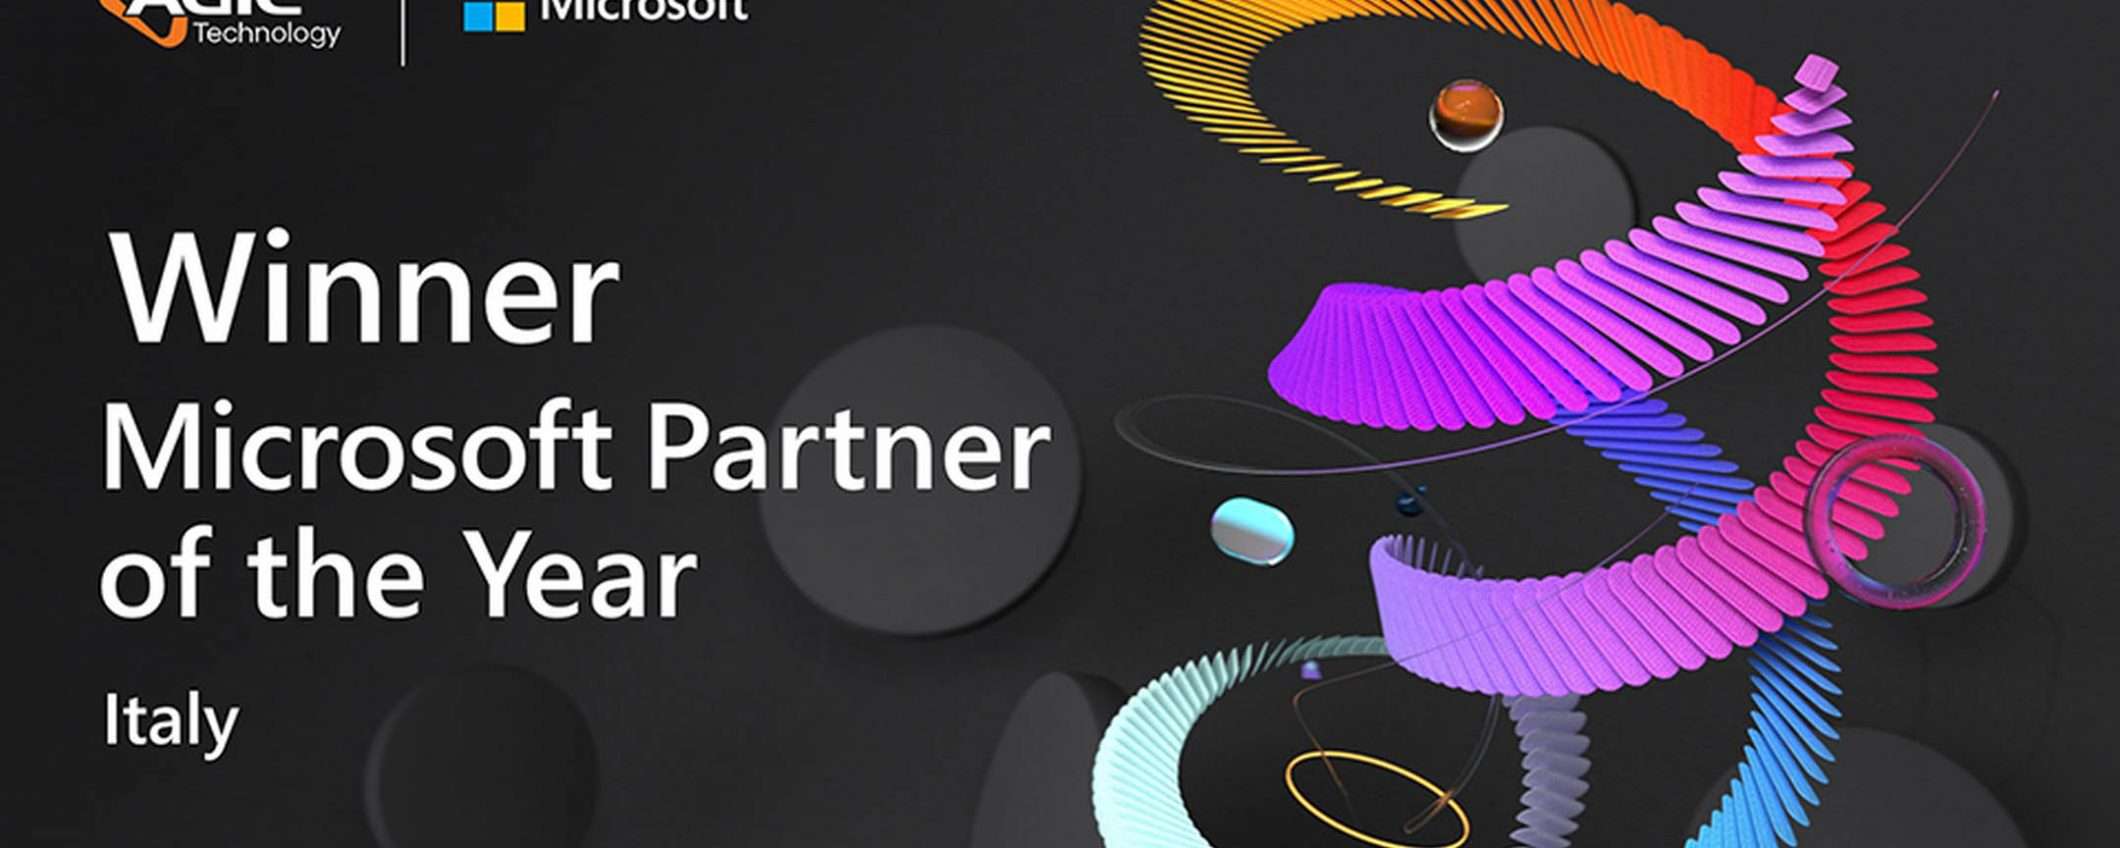 Agic Technology è Microsoft Partner of the Year 2021